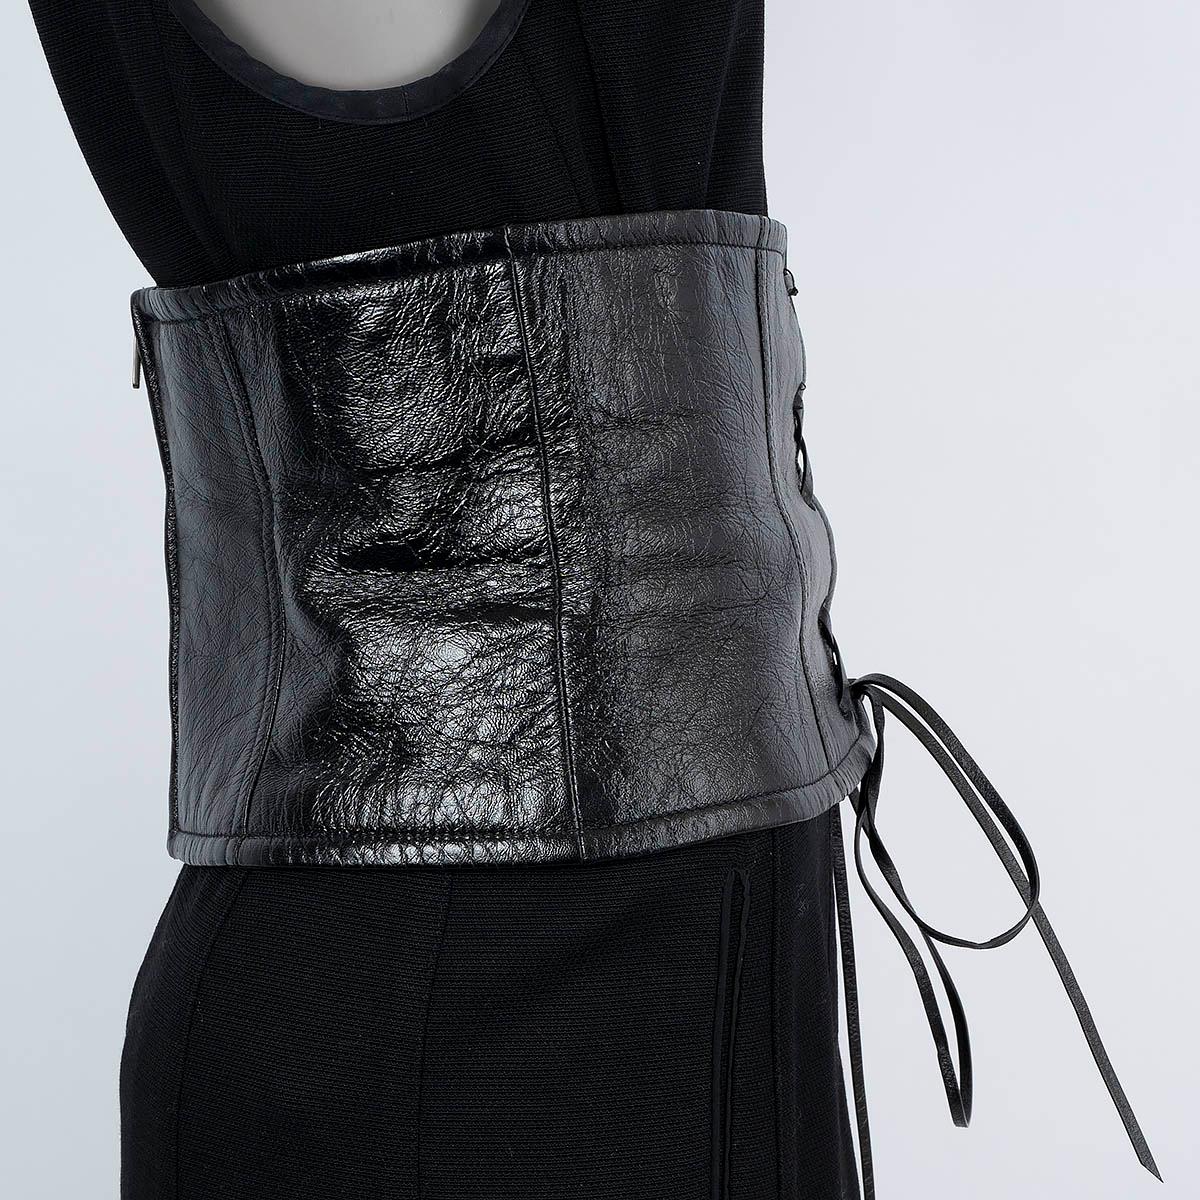 Noir MIU MIU ceinture en cuir noir 2019 LACE-UP WIDE WAIST en vente